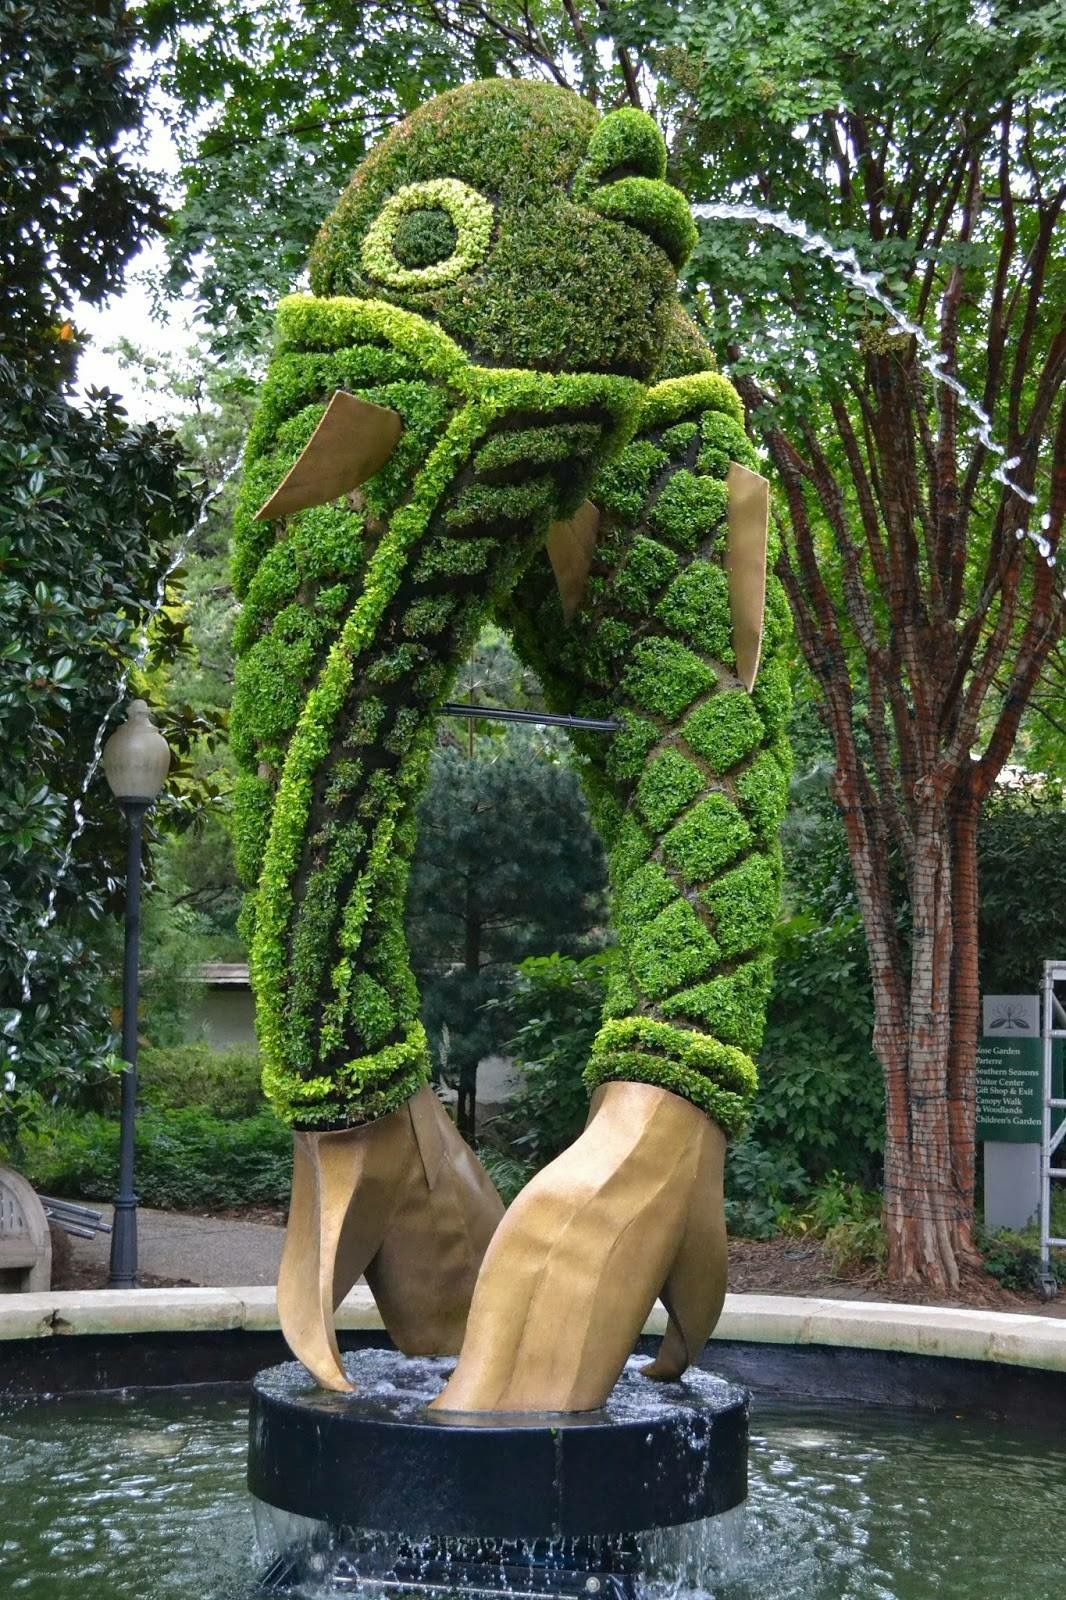 Garden Sculptures